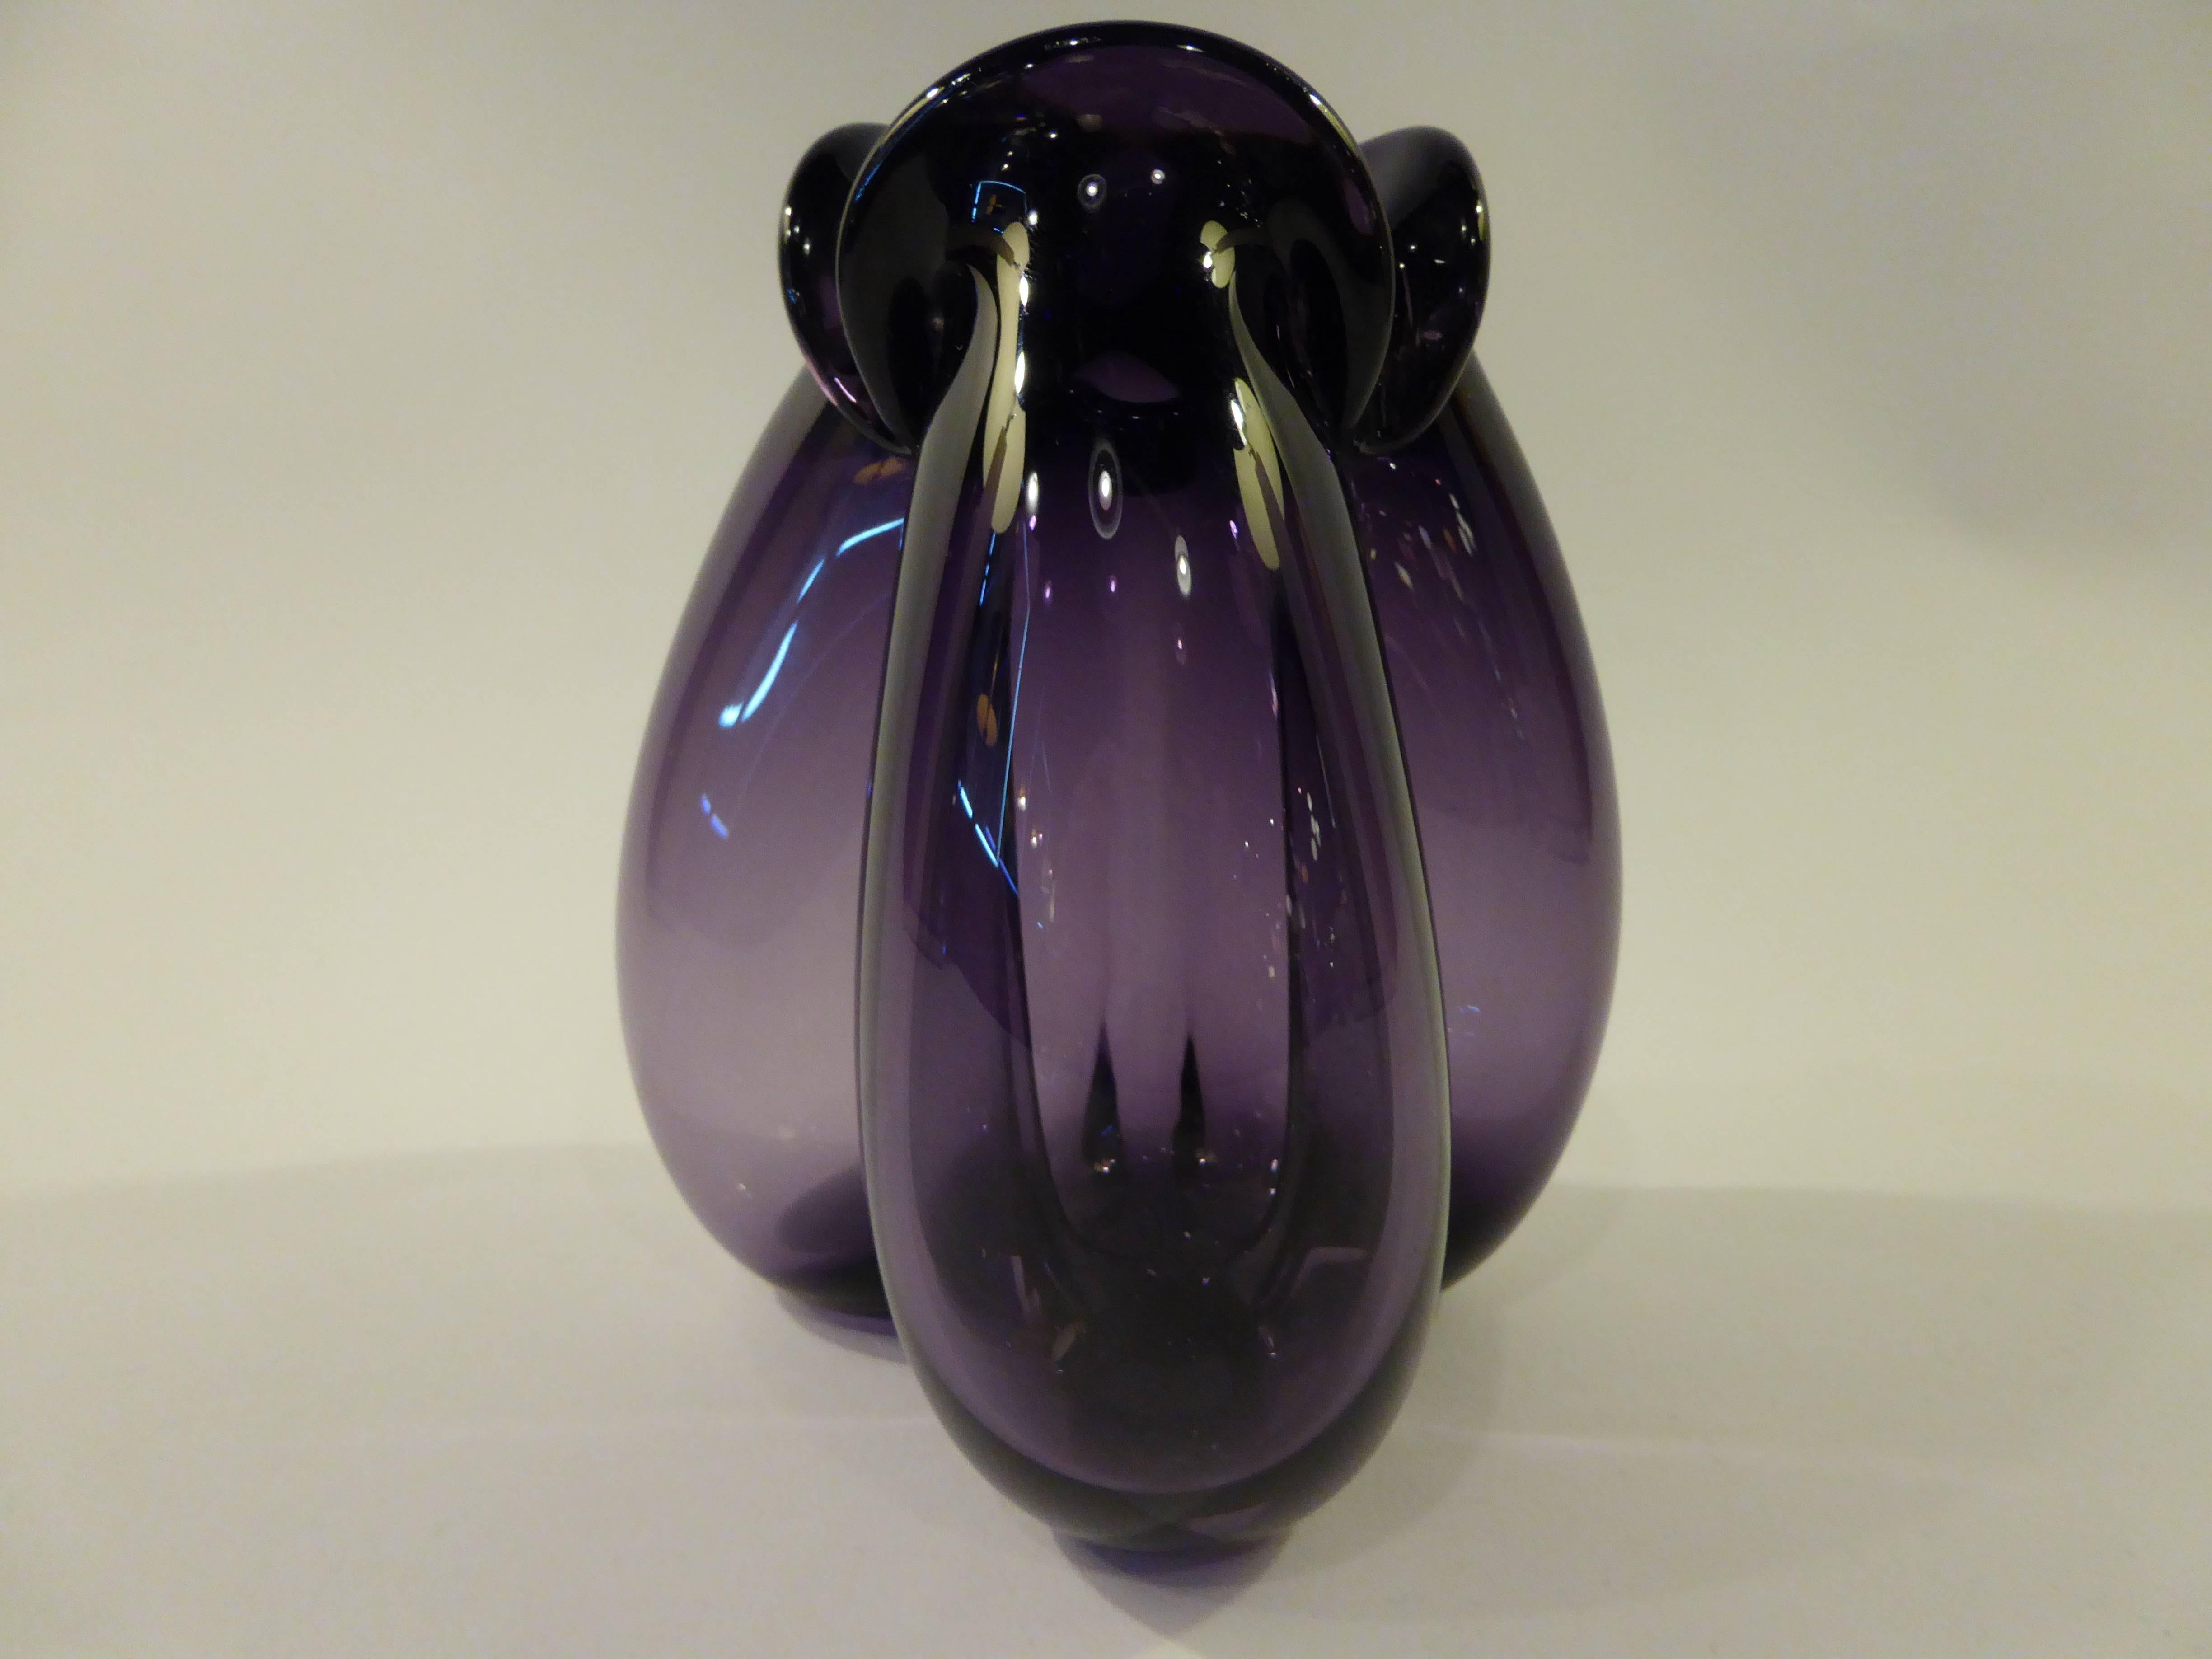 Rare Per Lutken 1955 Trefoil Blown Glass Vase for Holmegaard 3